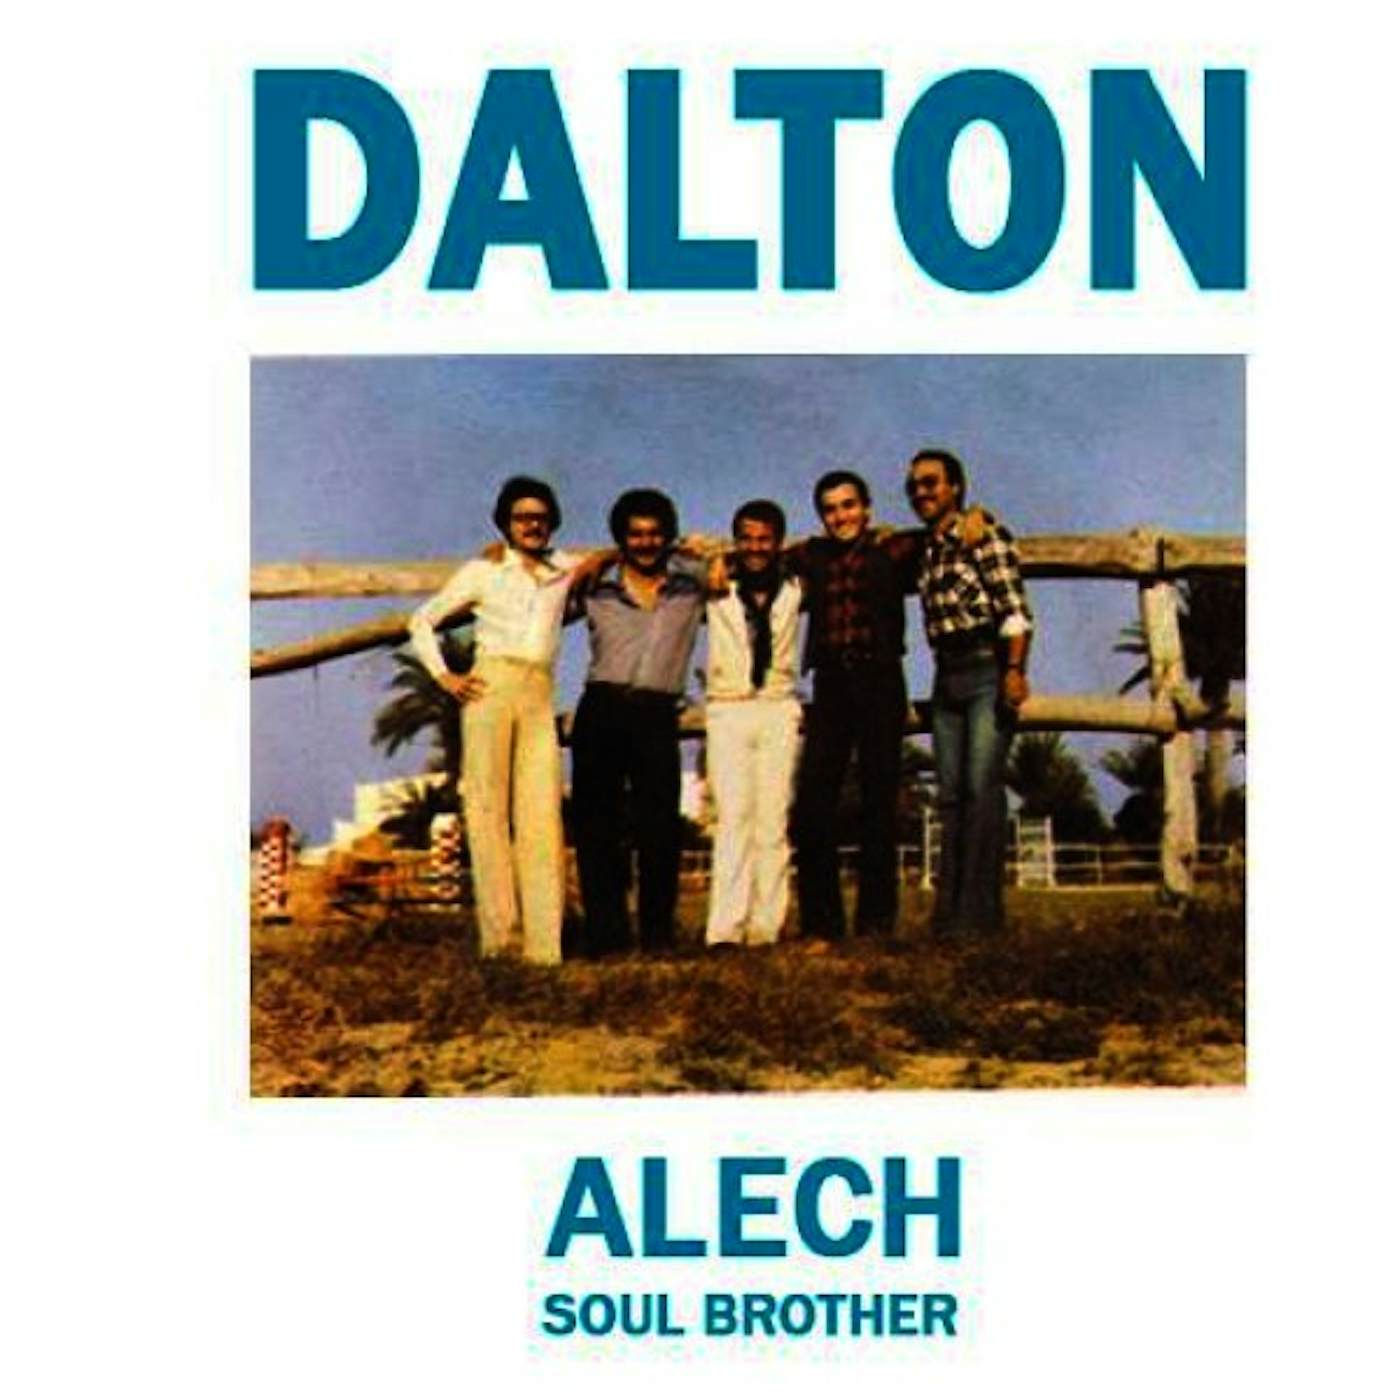 Dalton ALTECH Vinyl Record